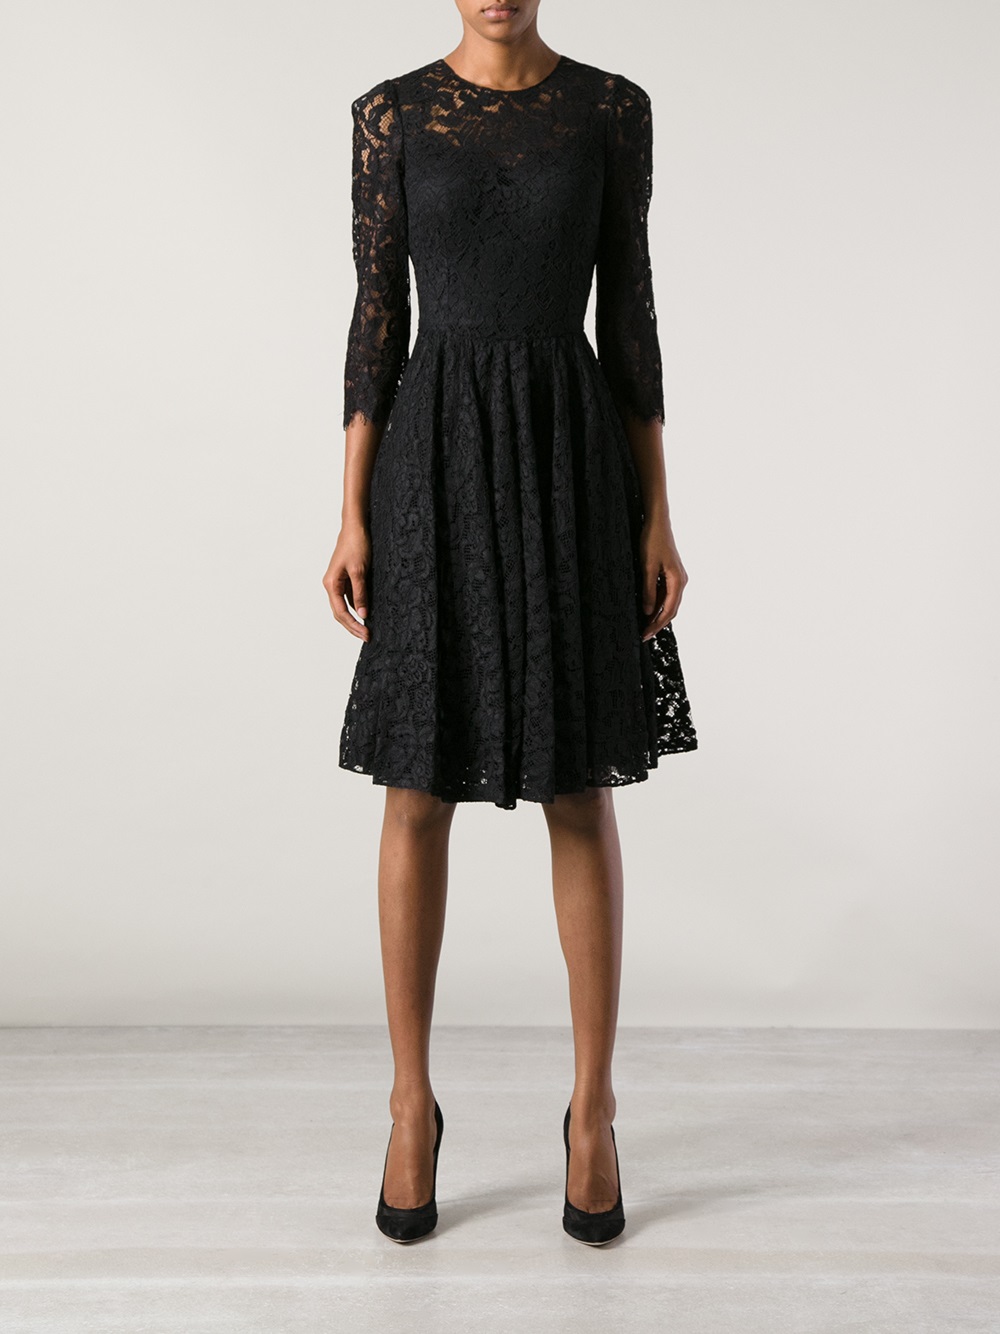 Dolce & gabbana Lace Dress in Black | Lyst